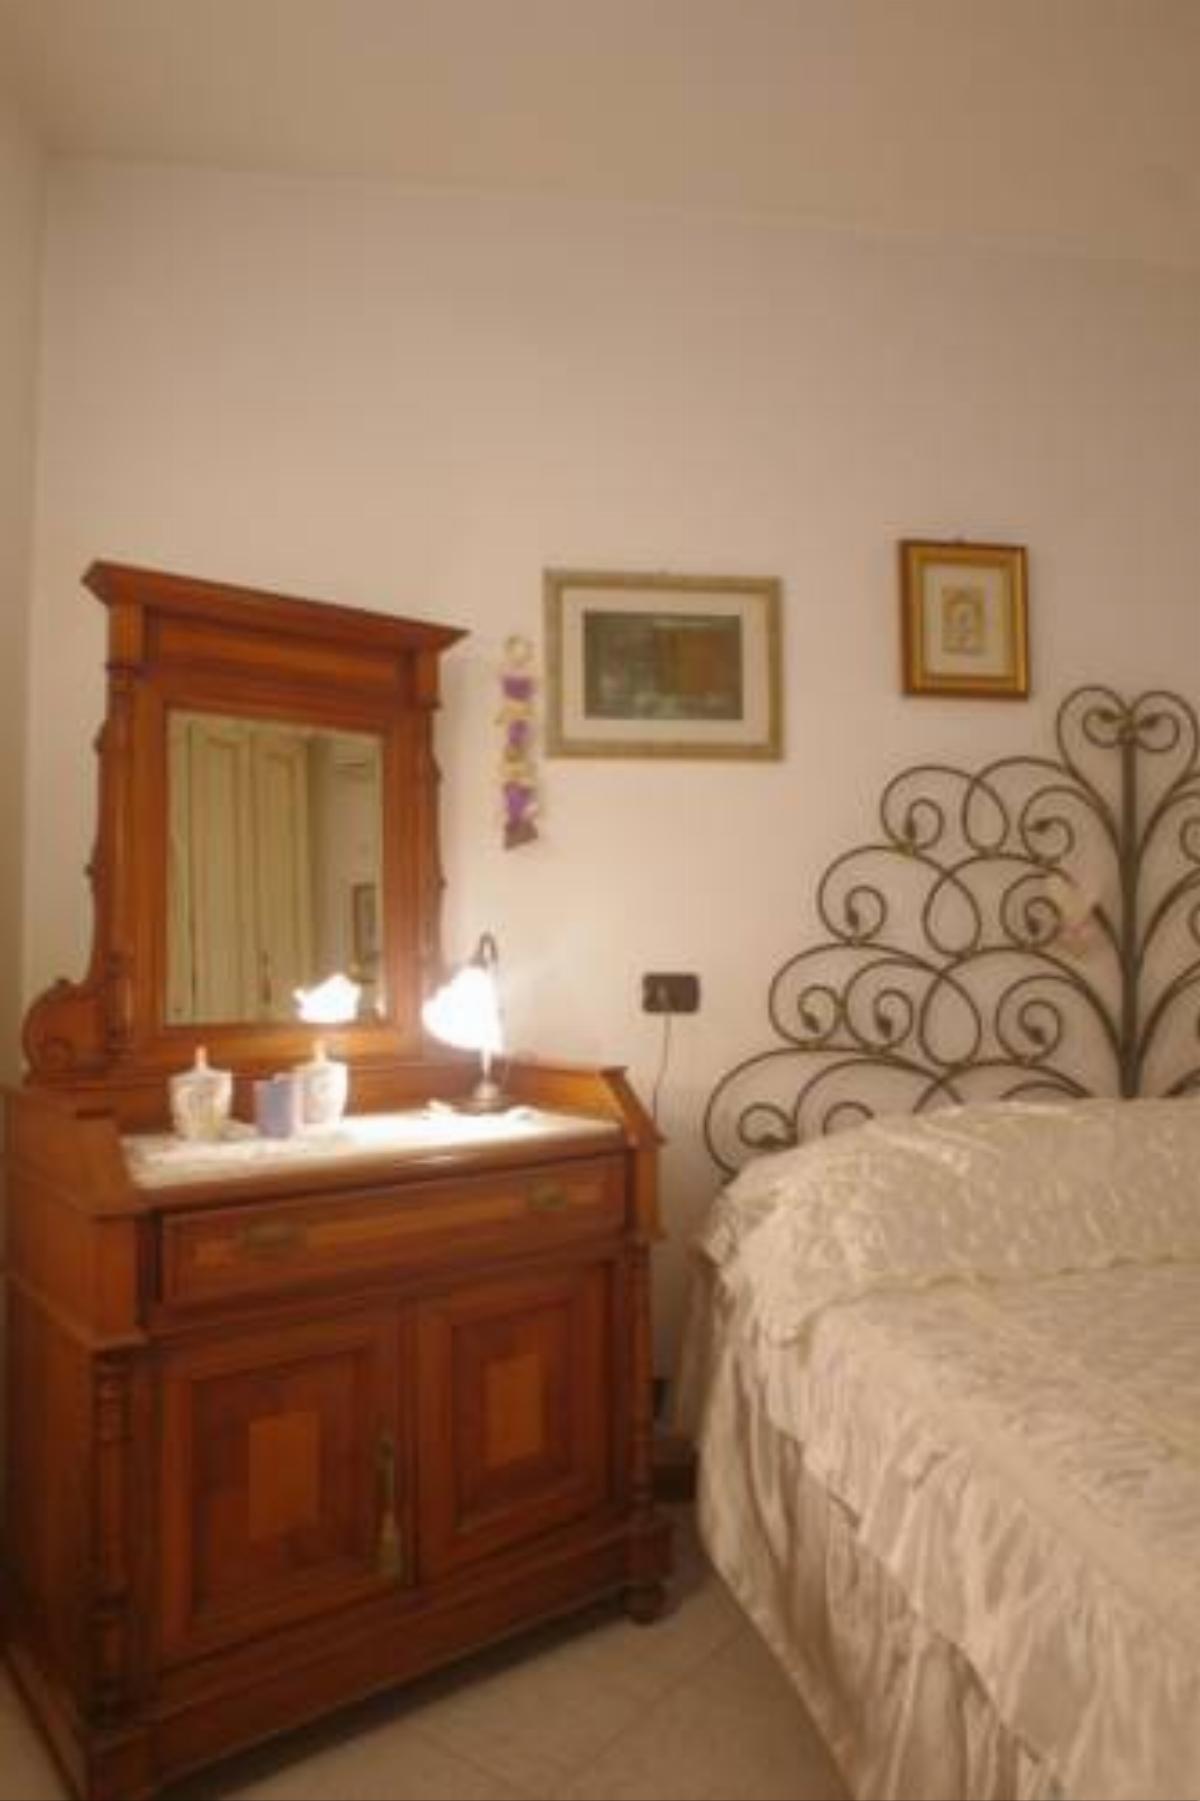 Casa Emilia Hotel Corsanico-Bargecchia Italy